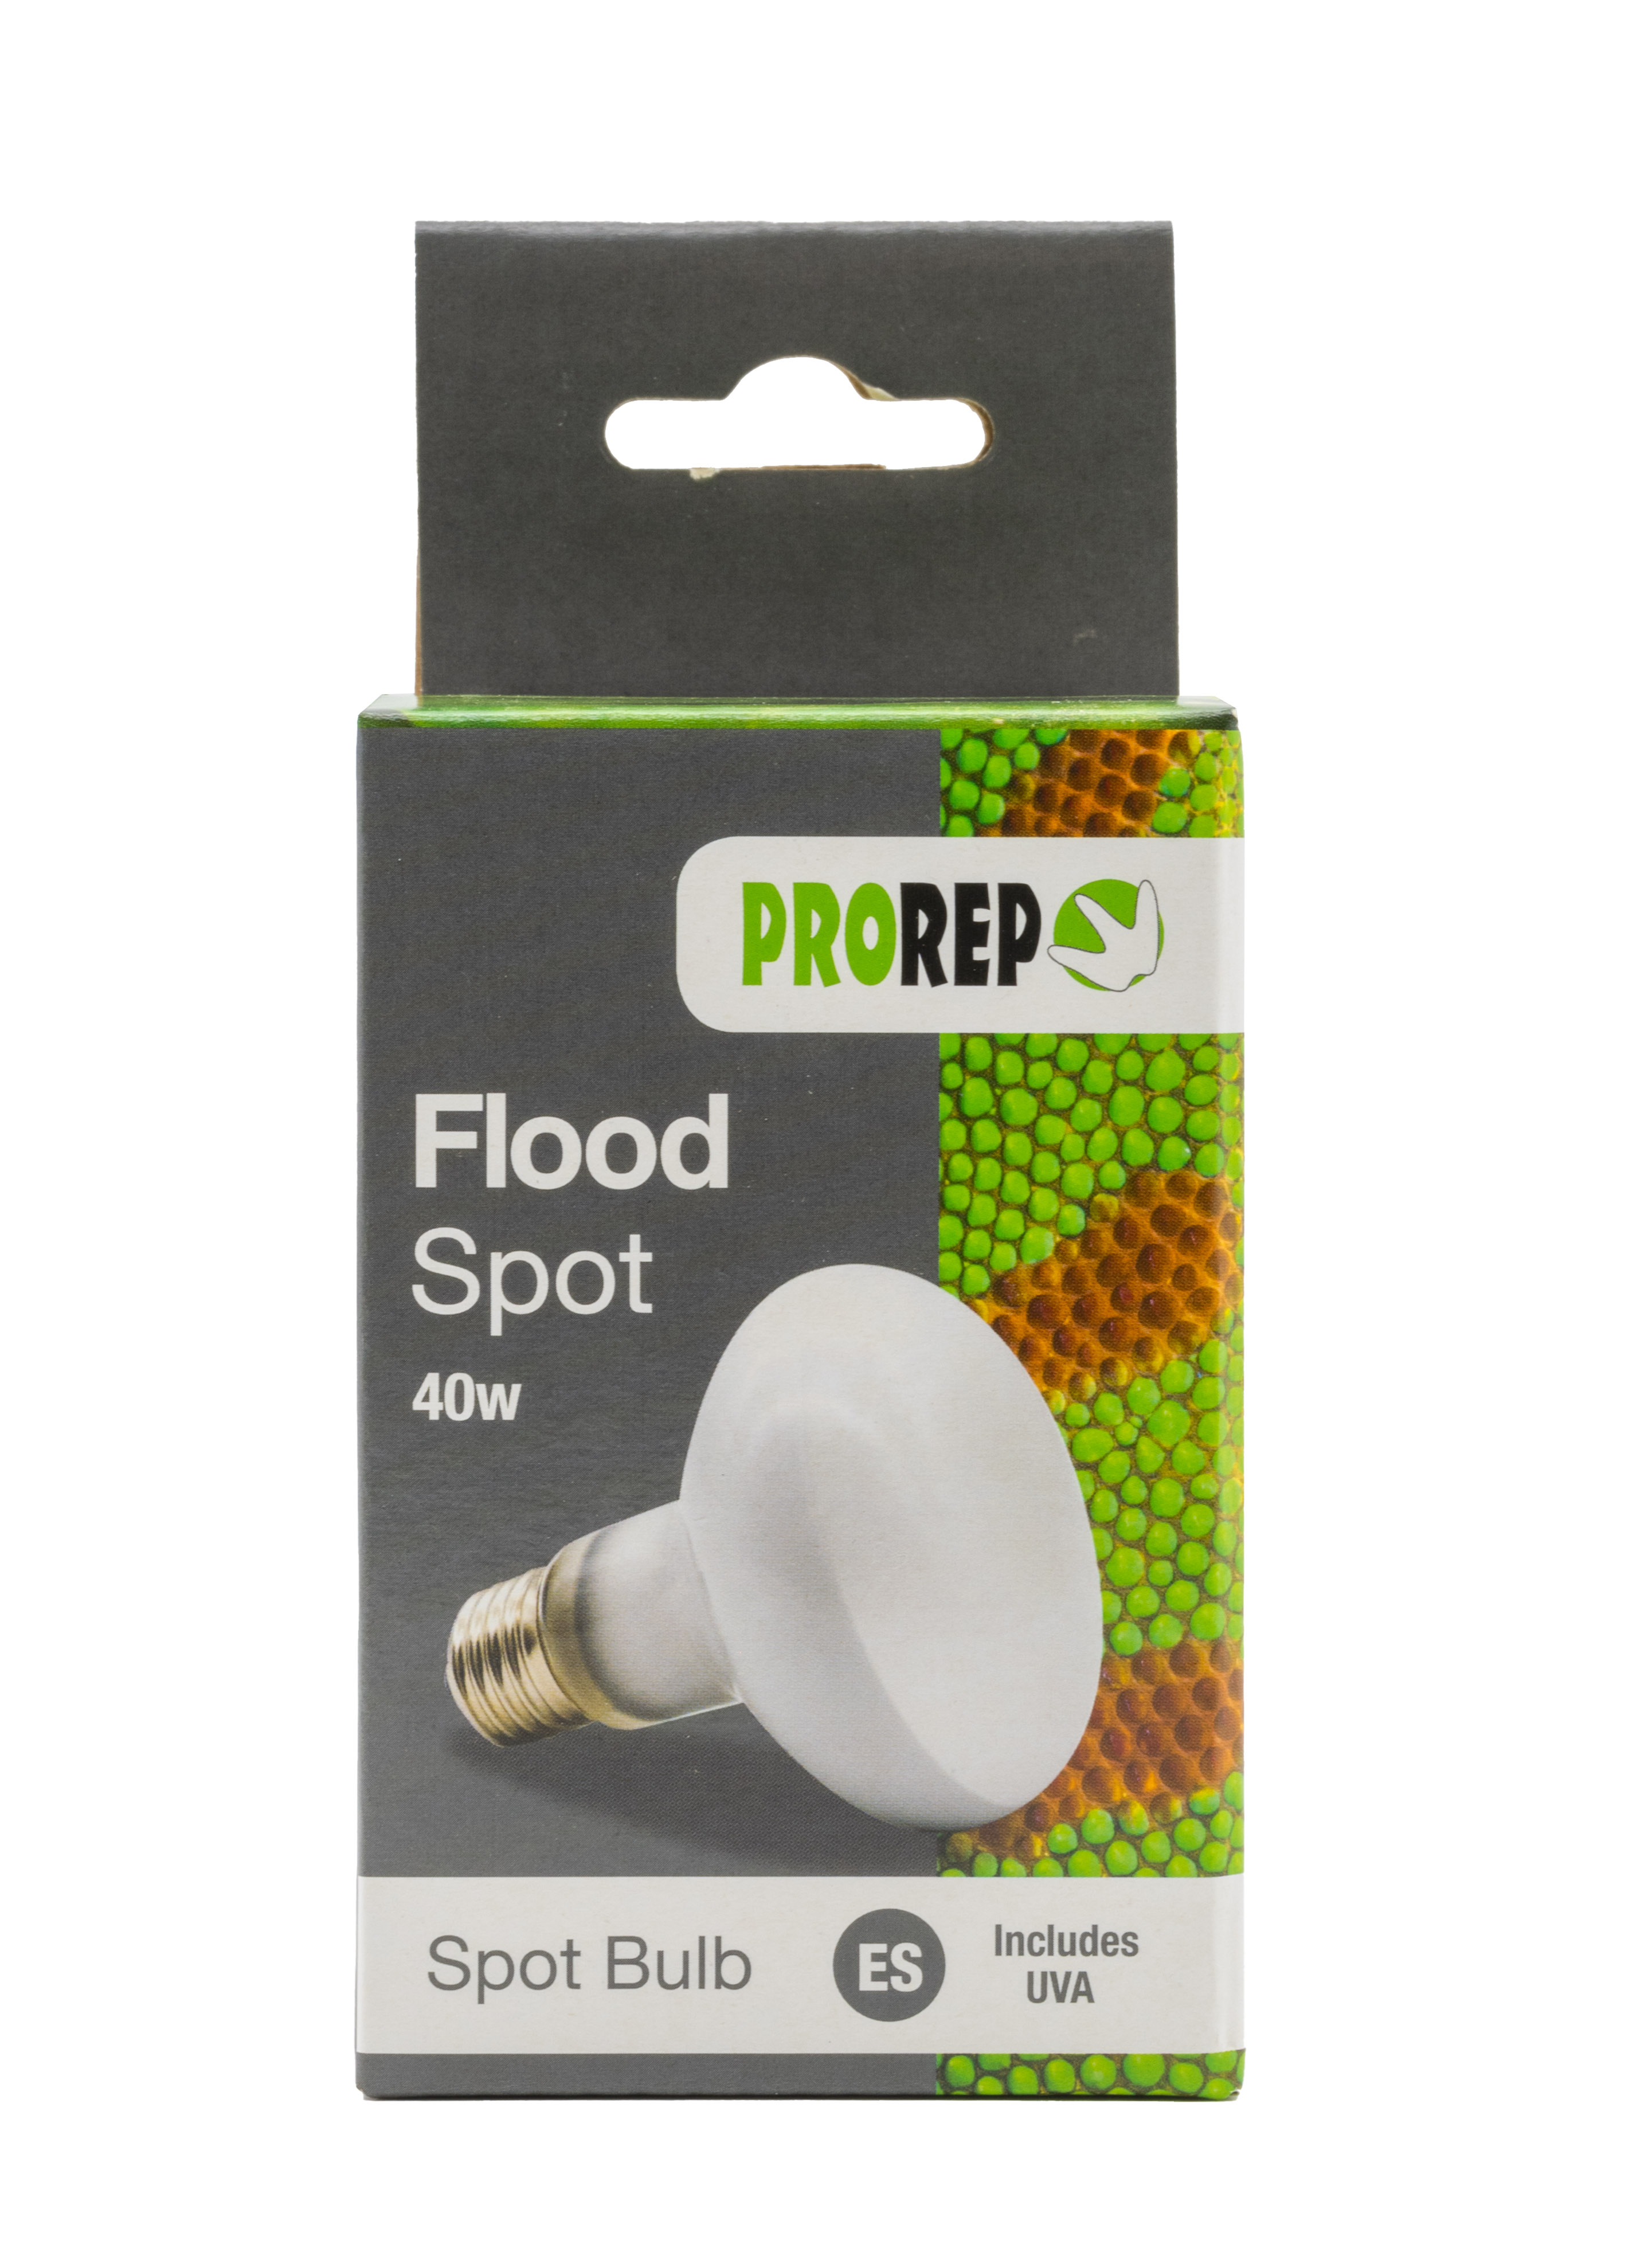 ProRep Flood Spot Lamp 40w ES